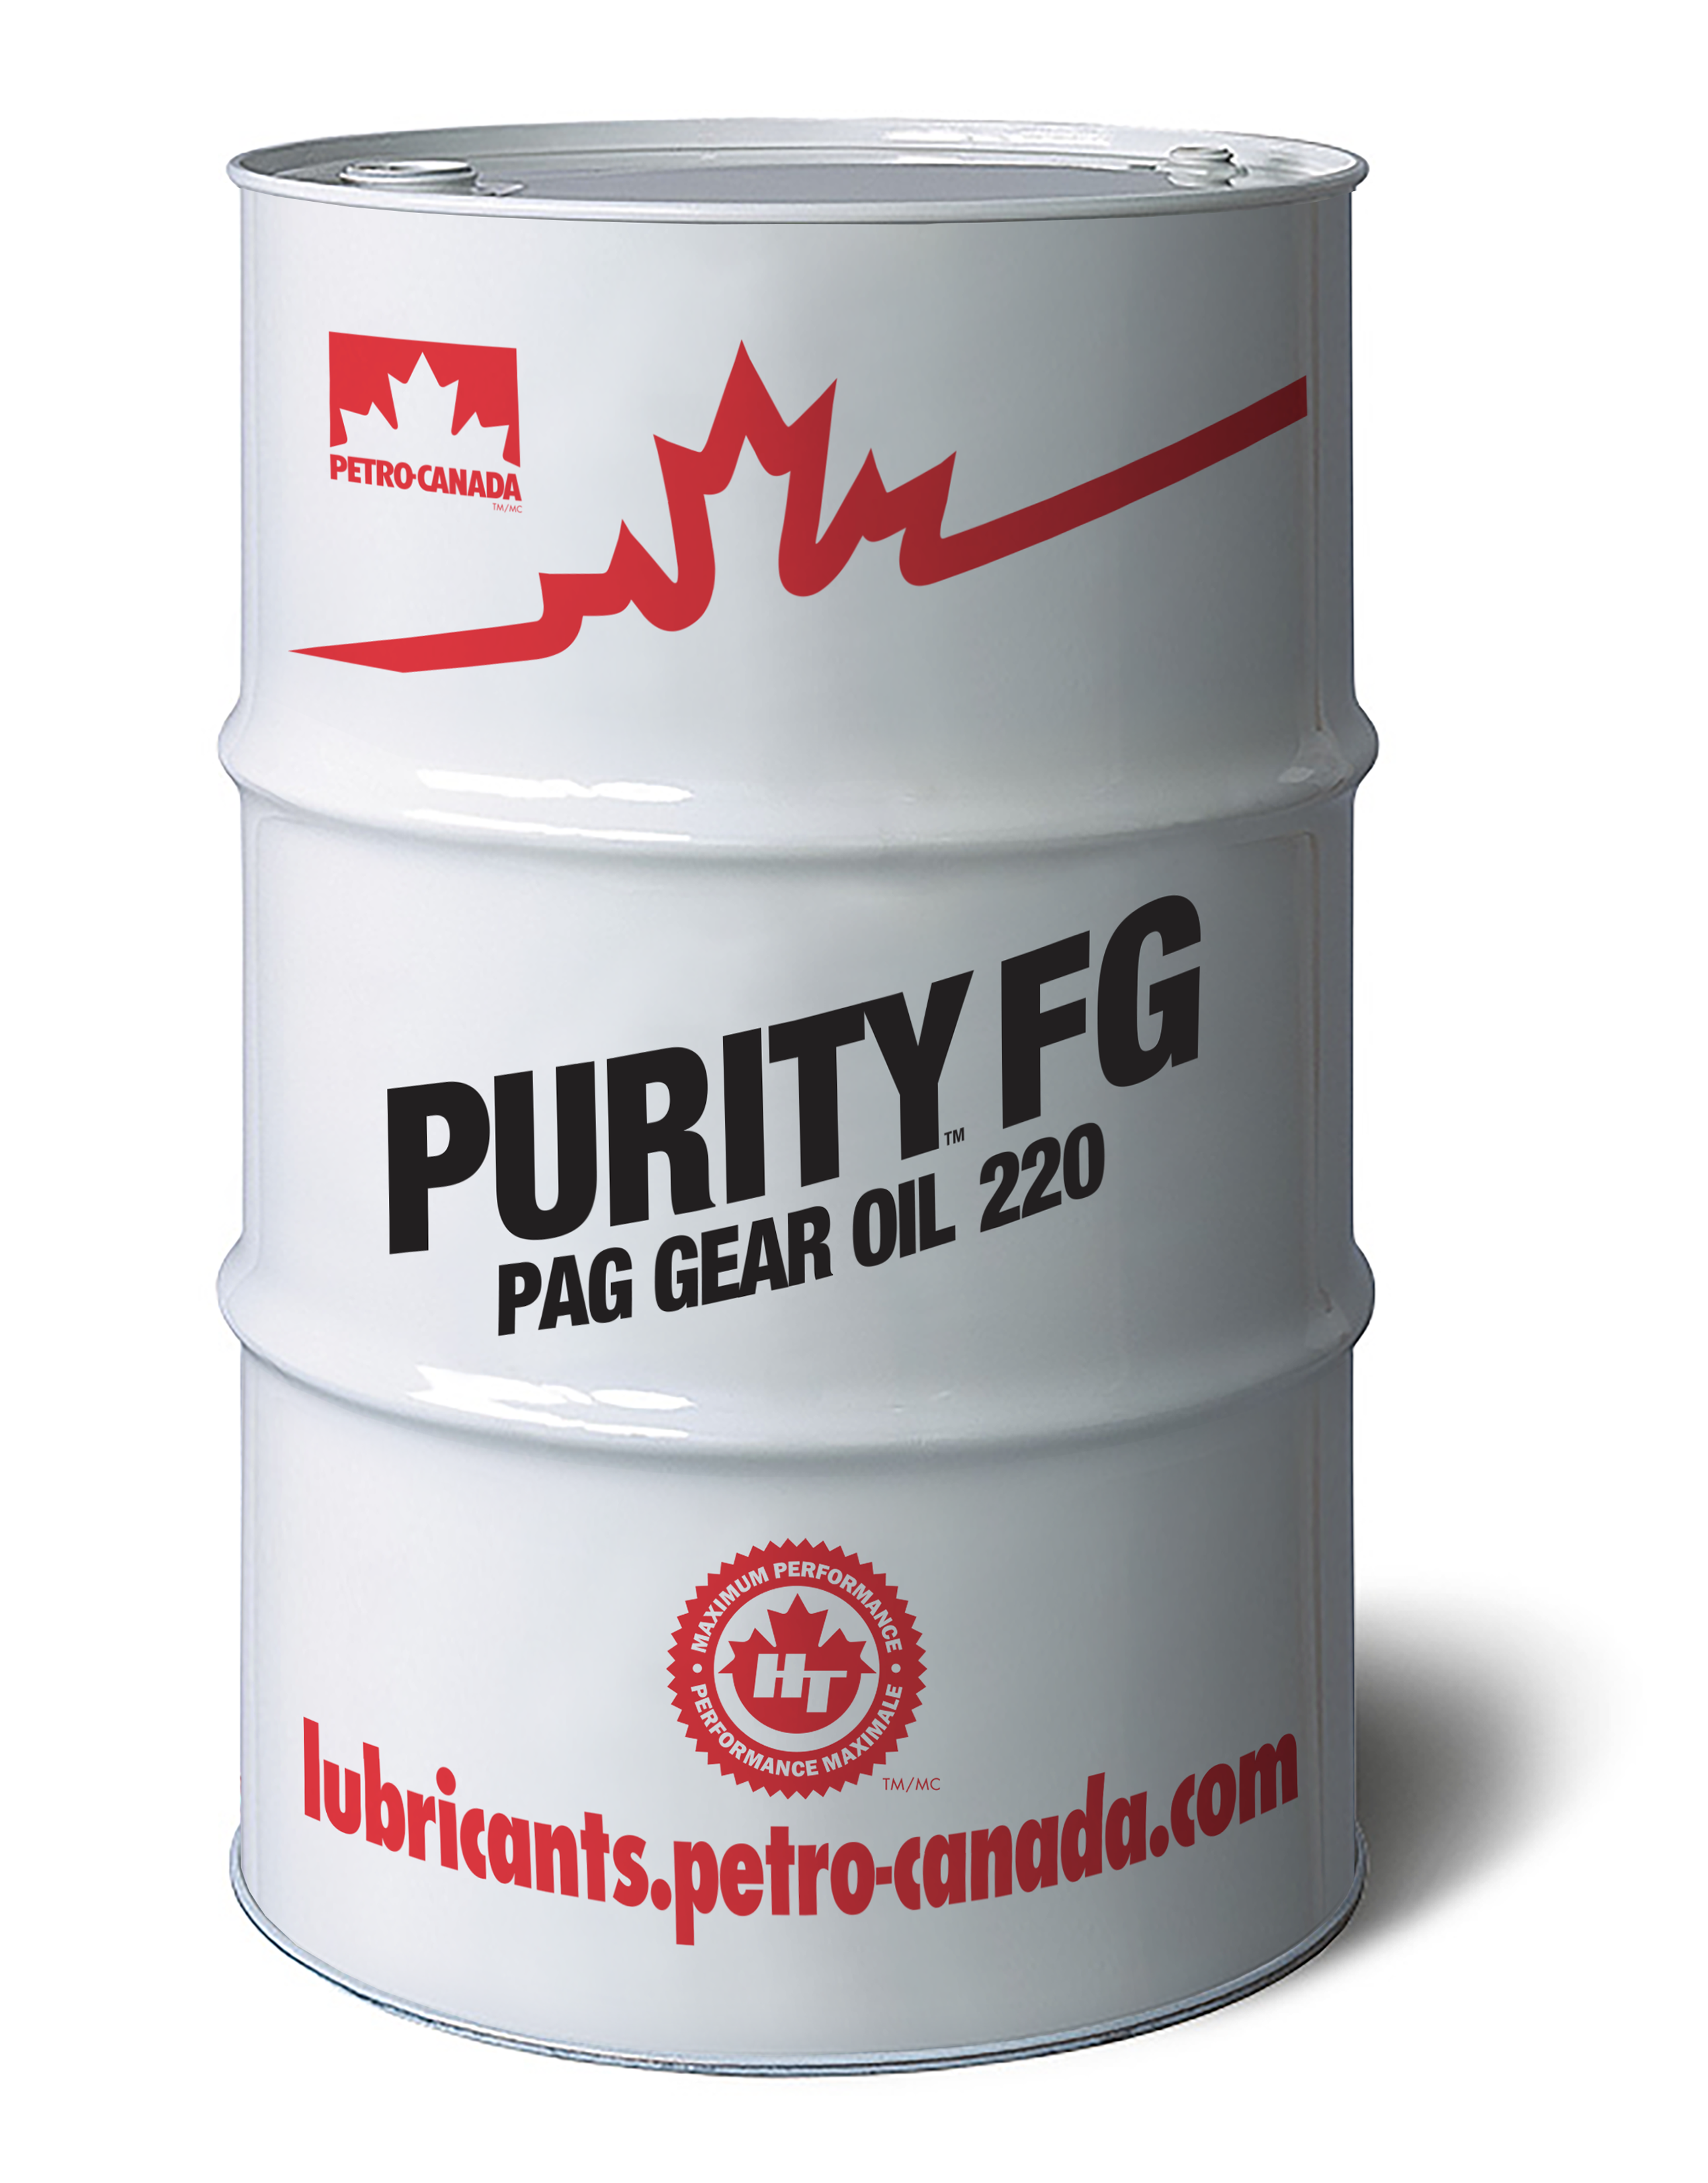 Petro-Canada Purity FG PAG Getriebeöl 220